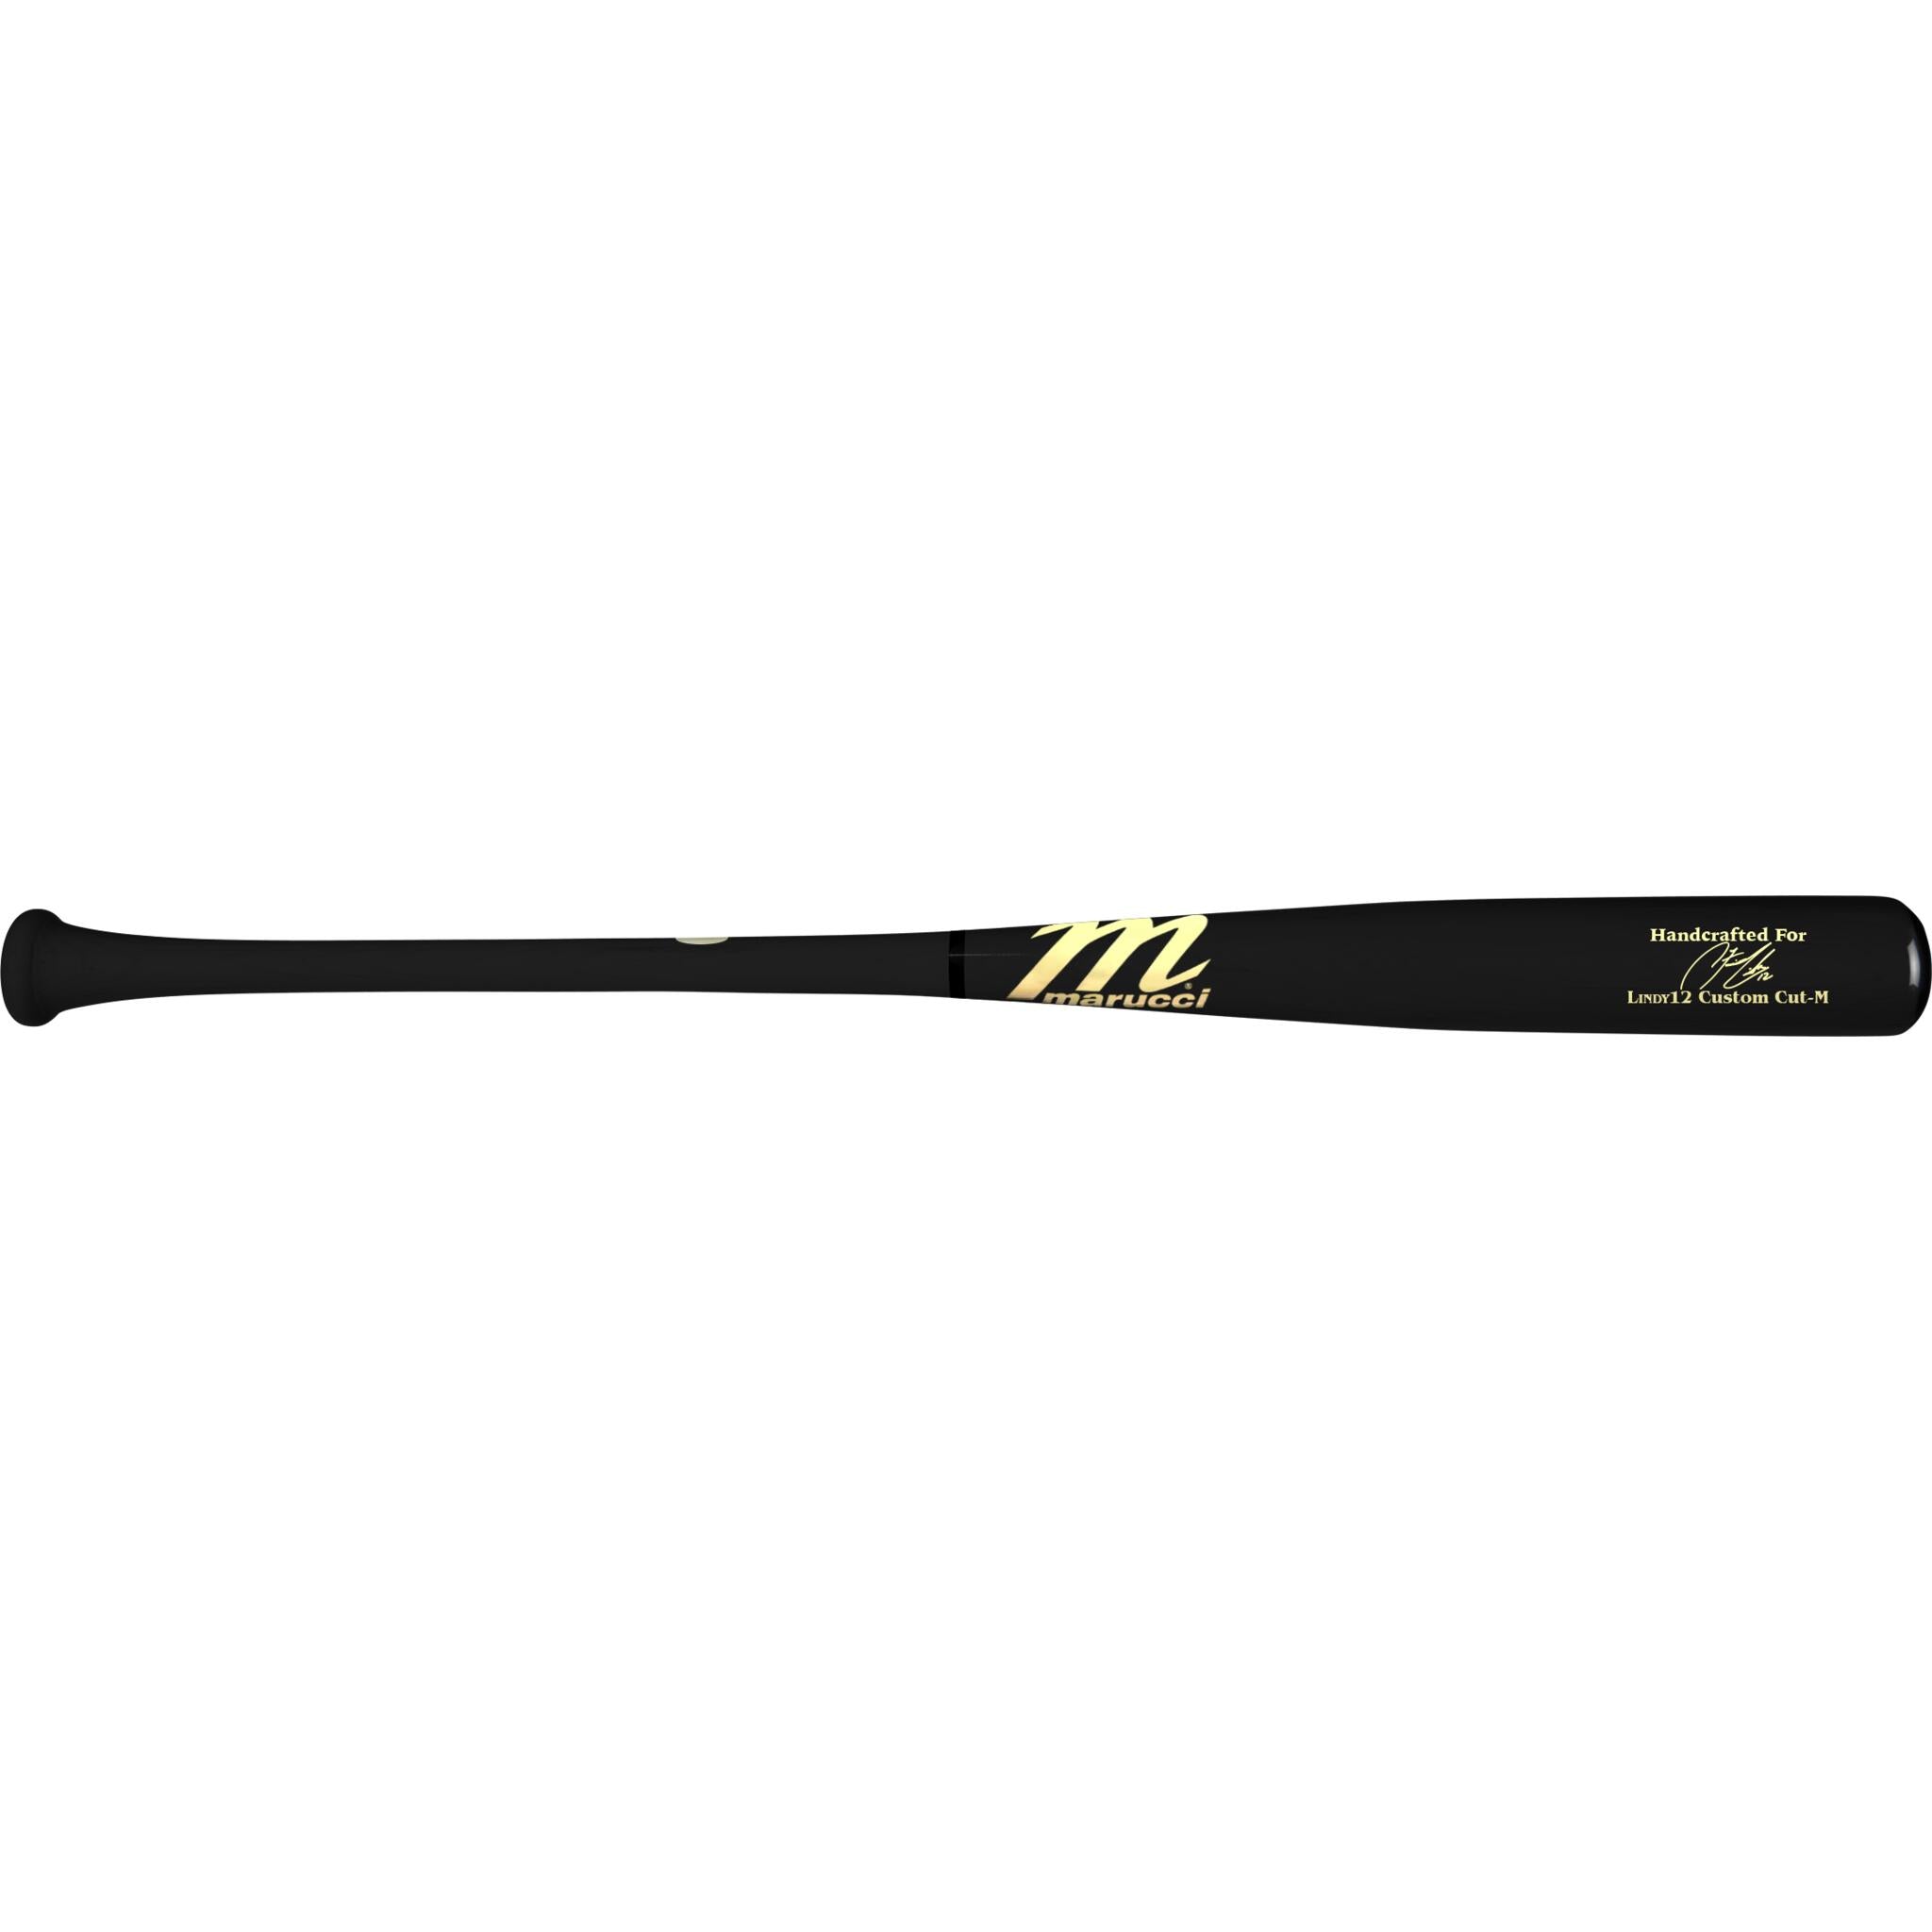 Marucci LINDY12 Pro Model Wood Baseball Bat | Source for Sports